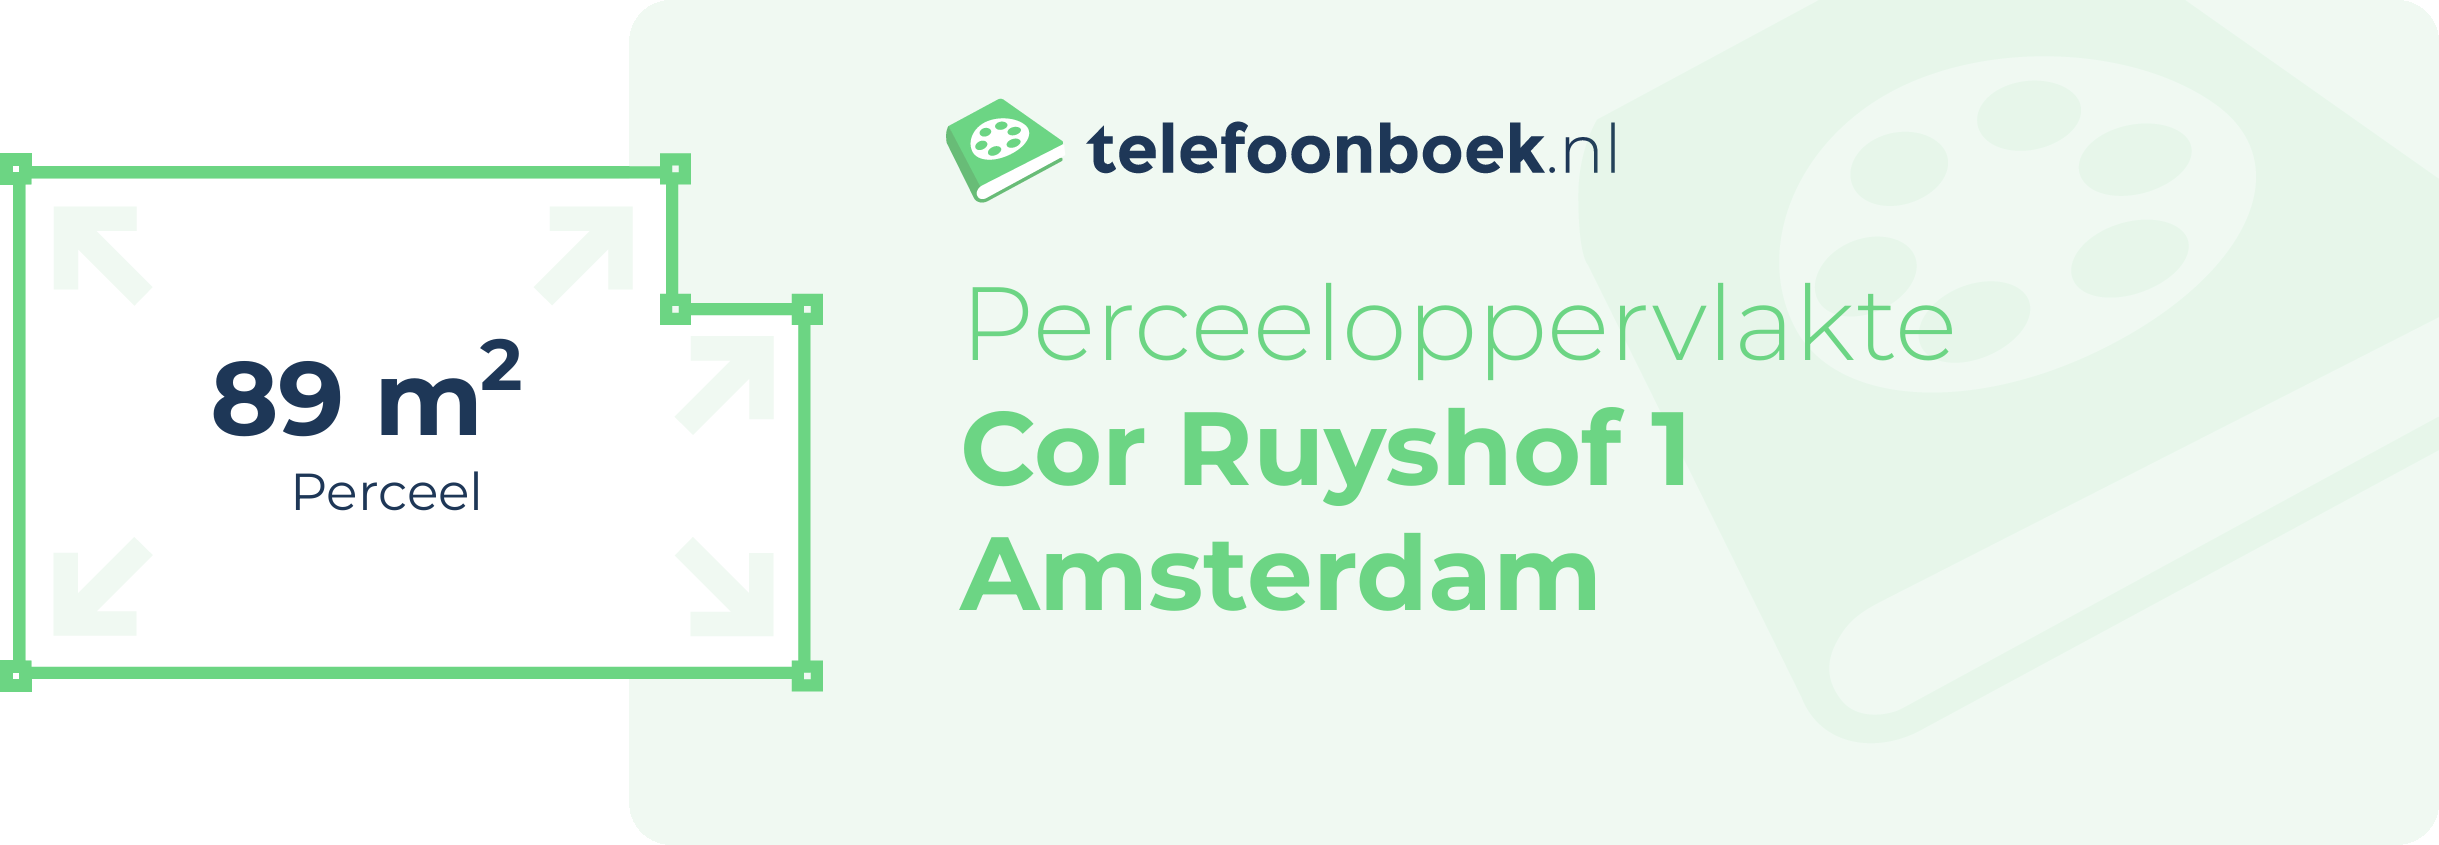 Perceeloppervlakte Cor Ruyshof 1 Amsterdam